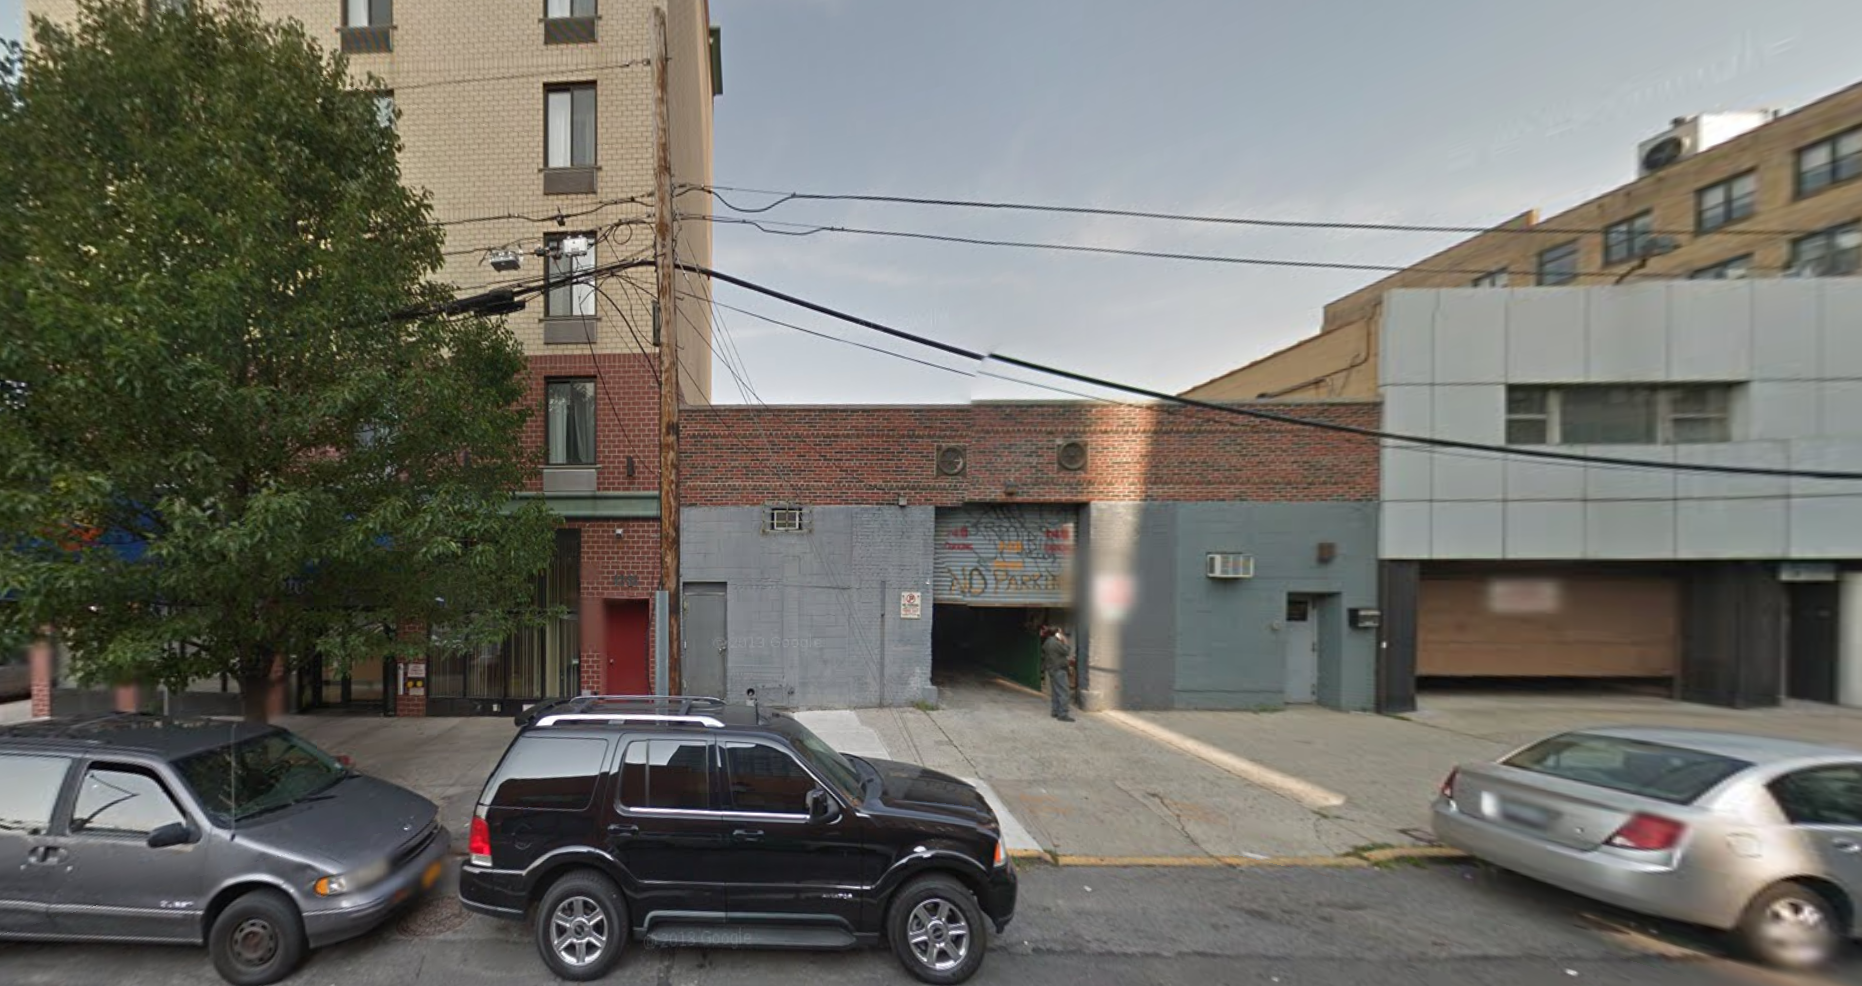 42-22 Crescent Street, image via Google Maps